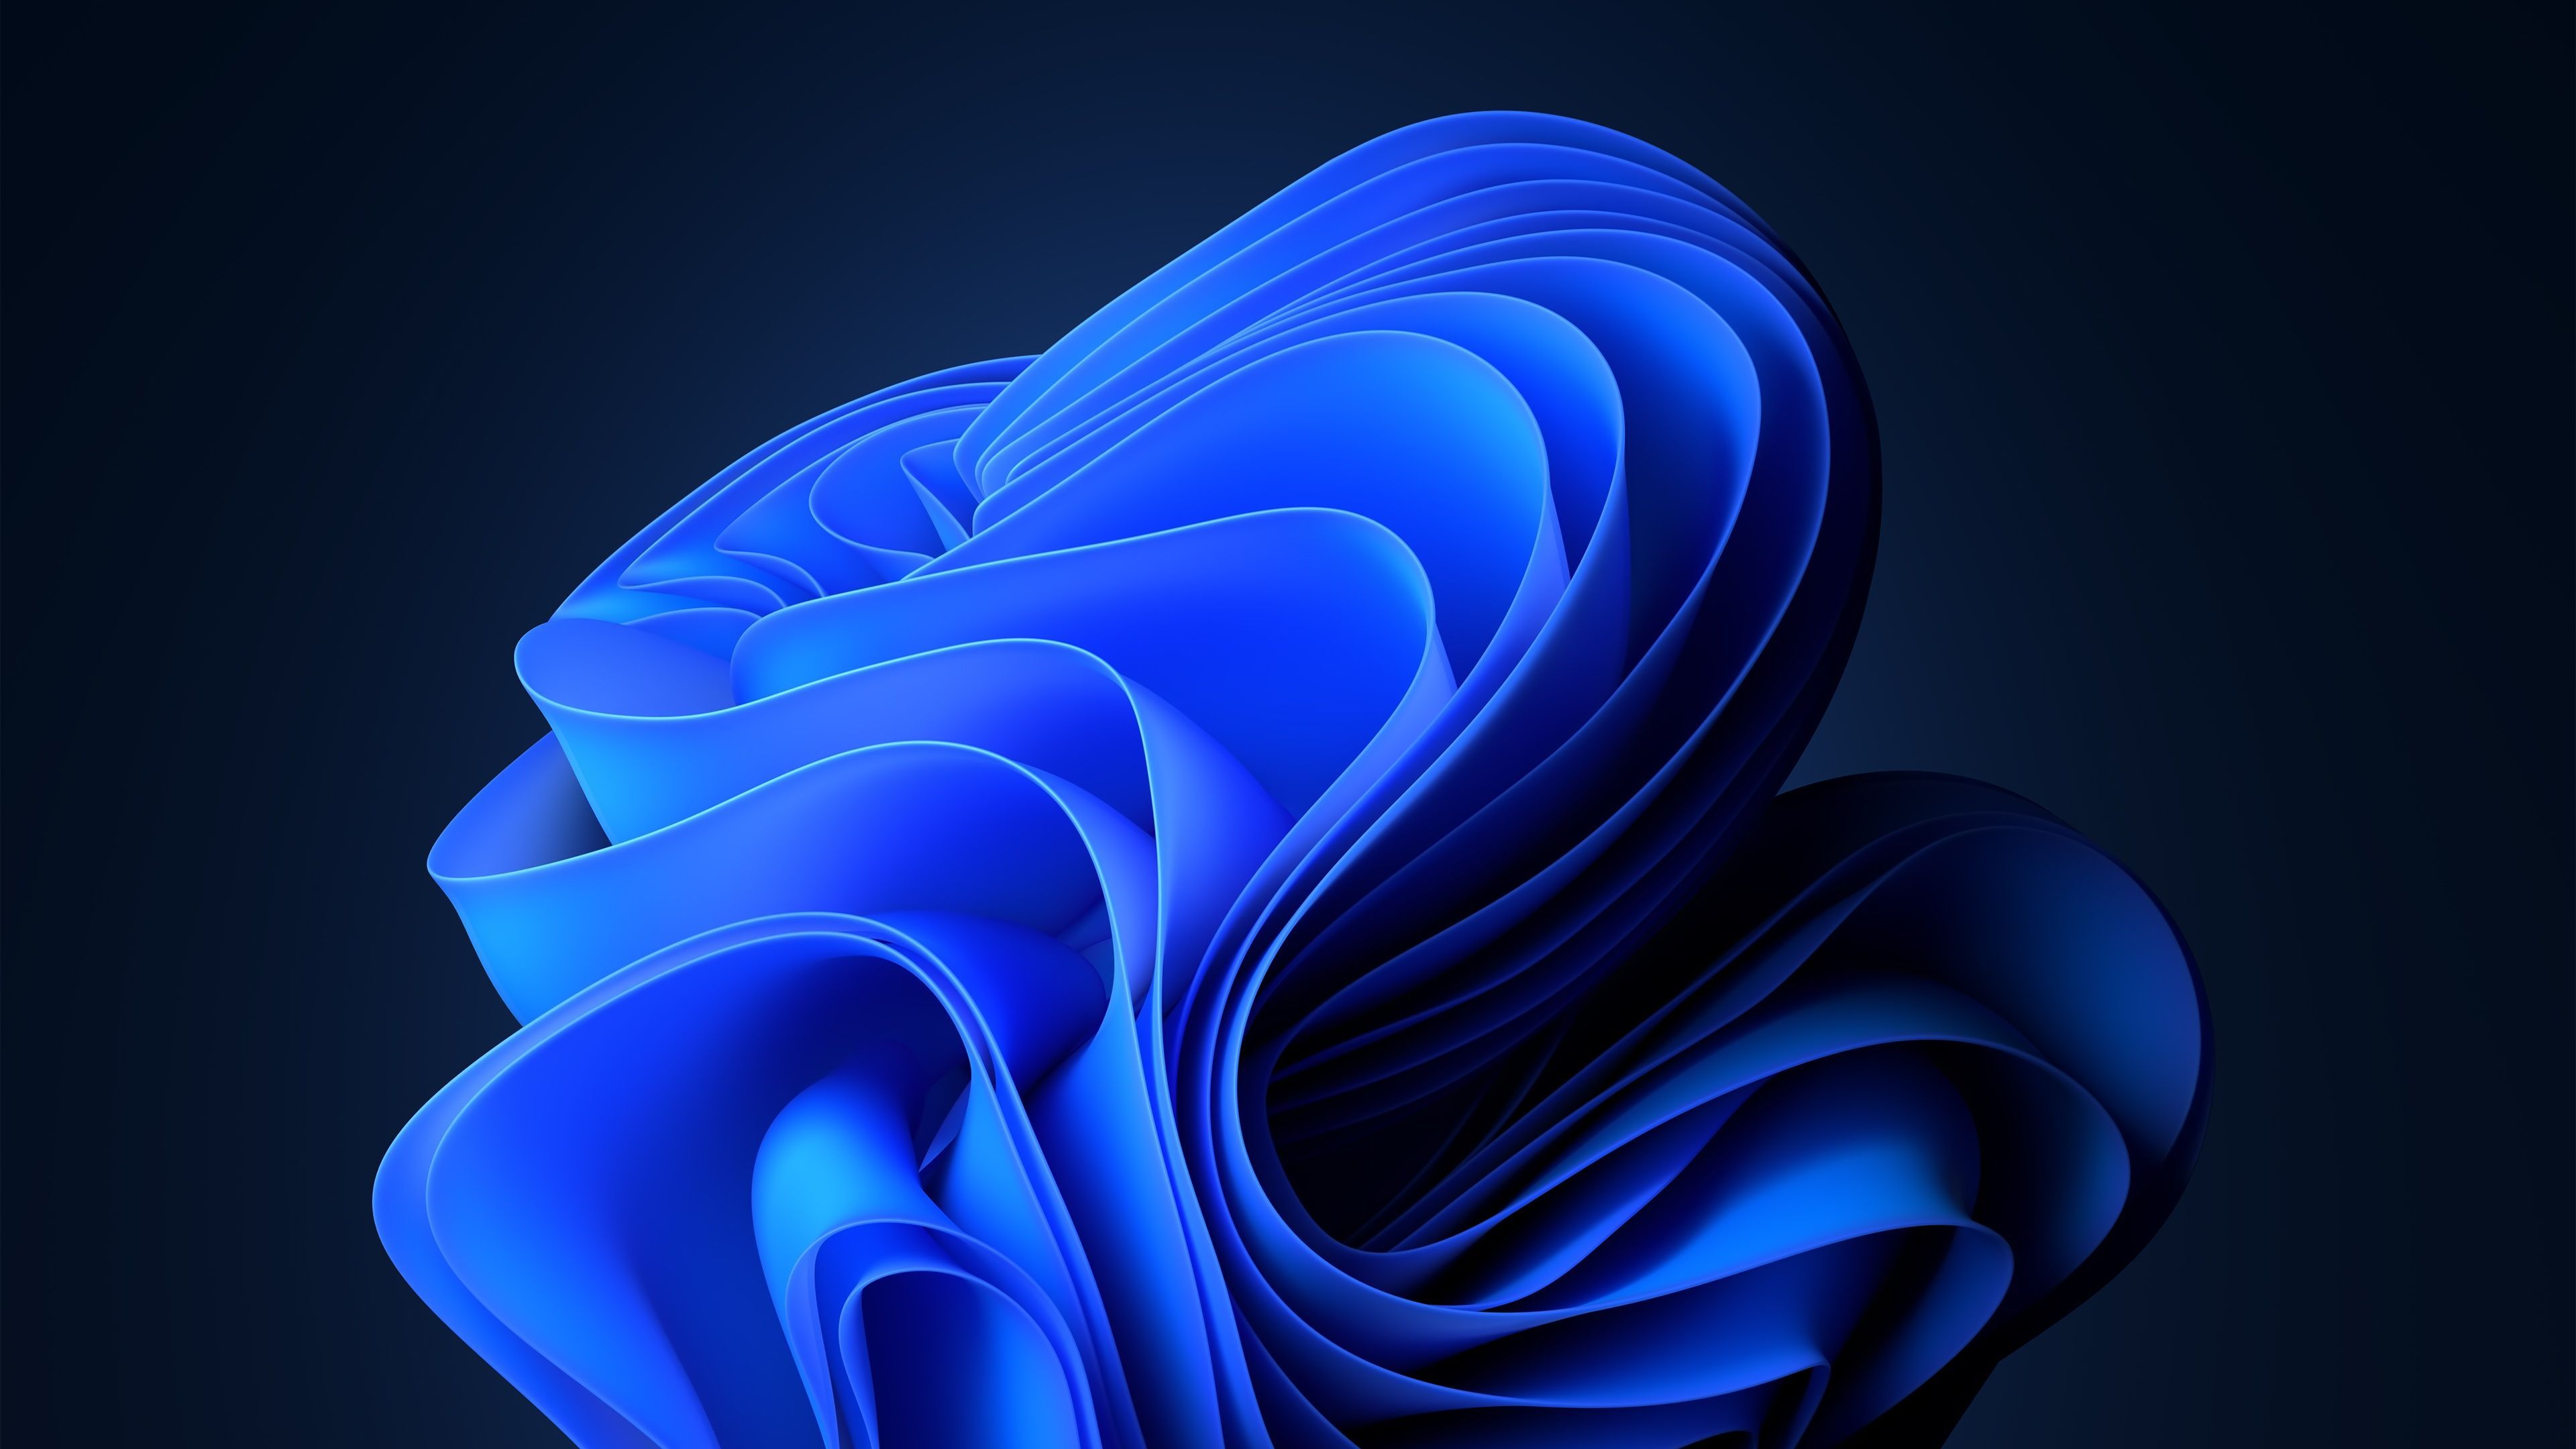 A blue abstract piece of art. - Technology, gaming, dark blue, indigo